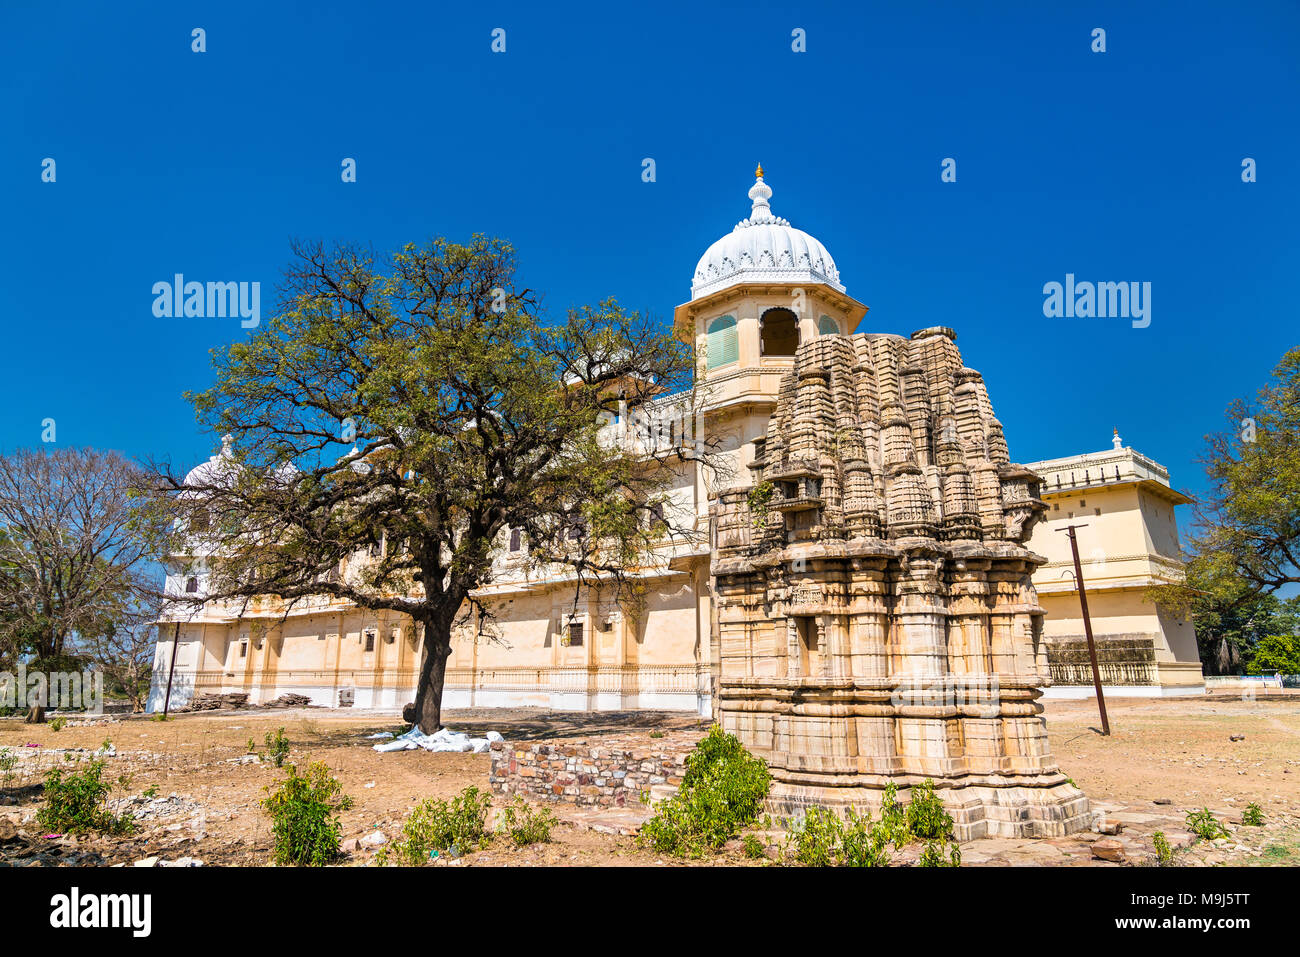 Fateh Prakash Mahal Palace at Chittorgarh Fort - Rajastan, India Stock Photo